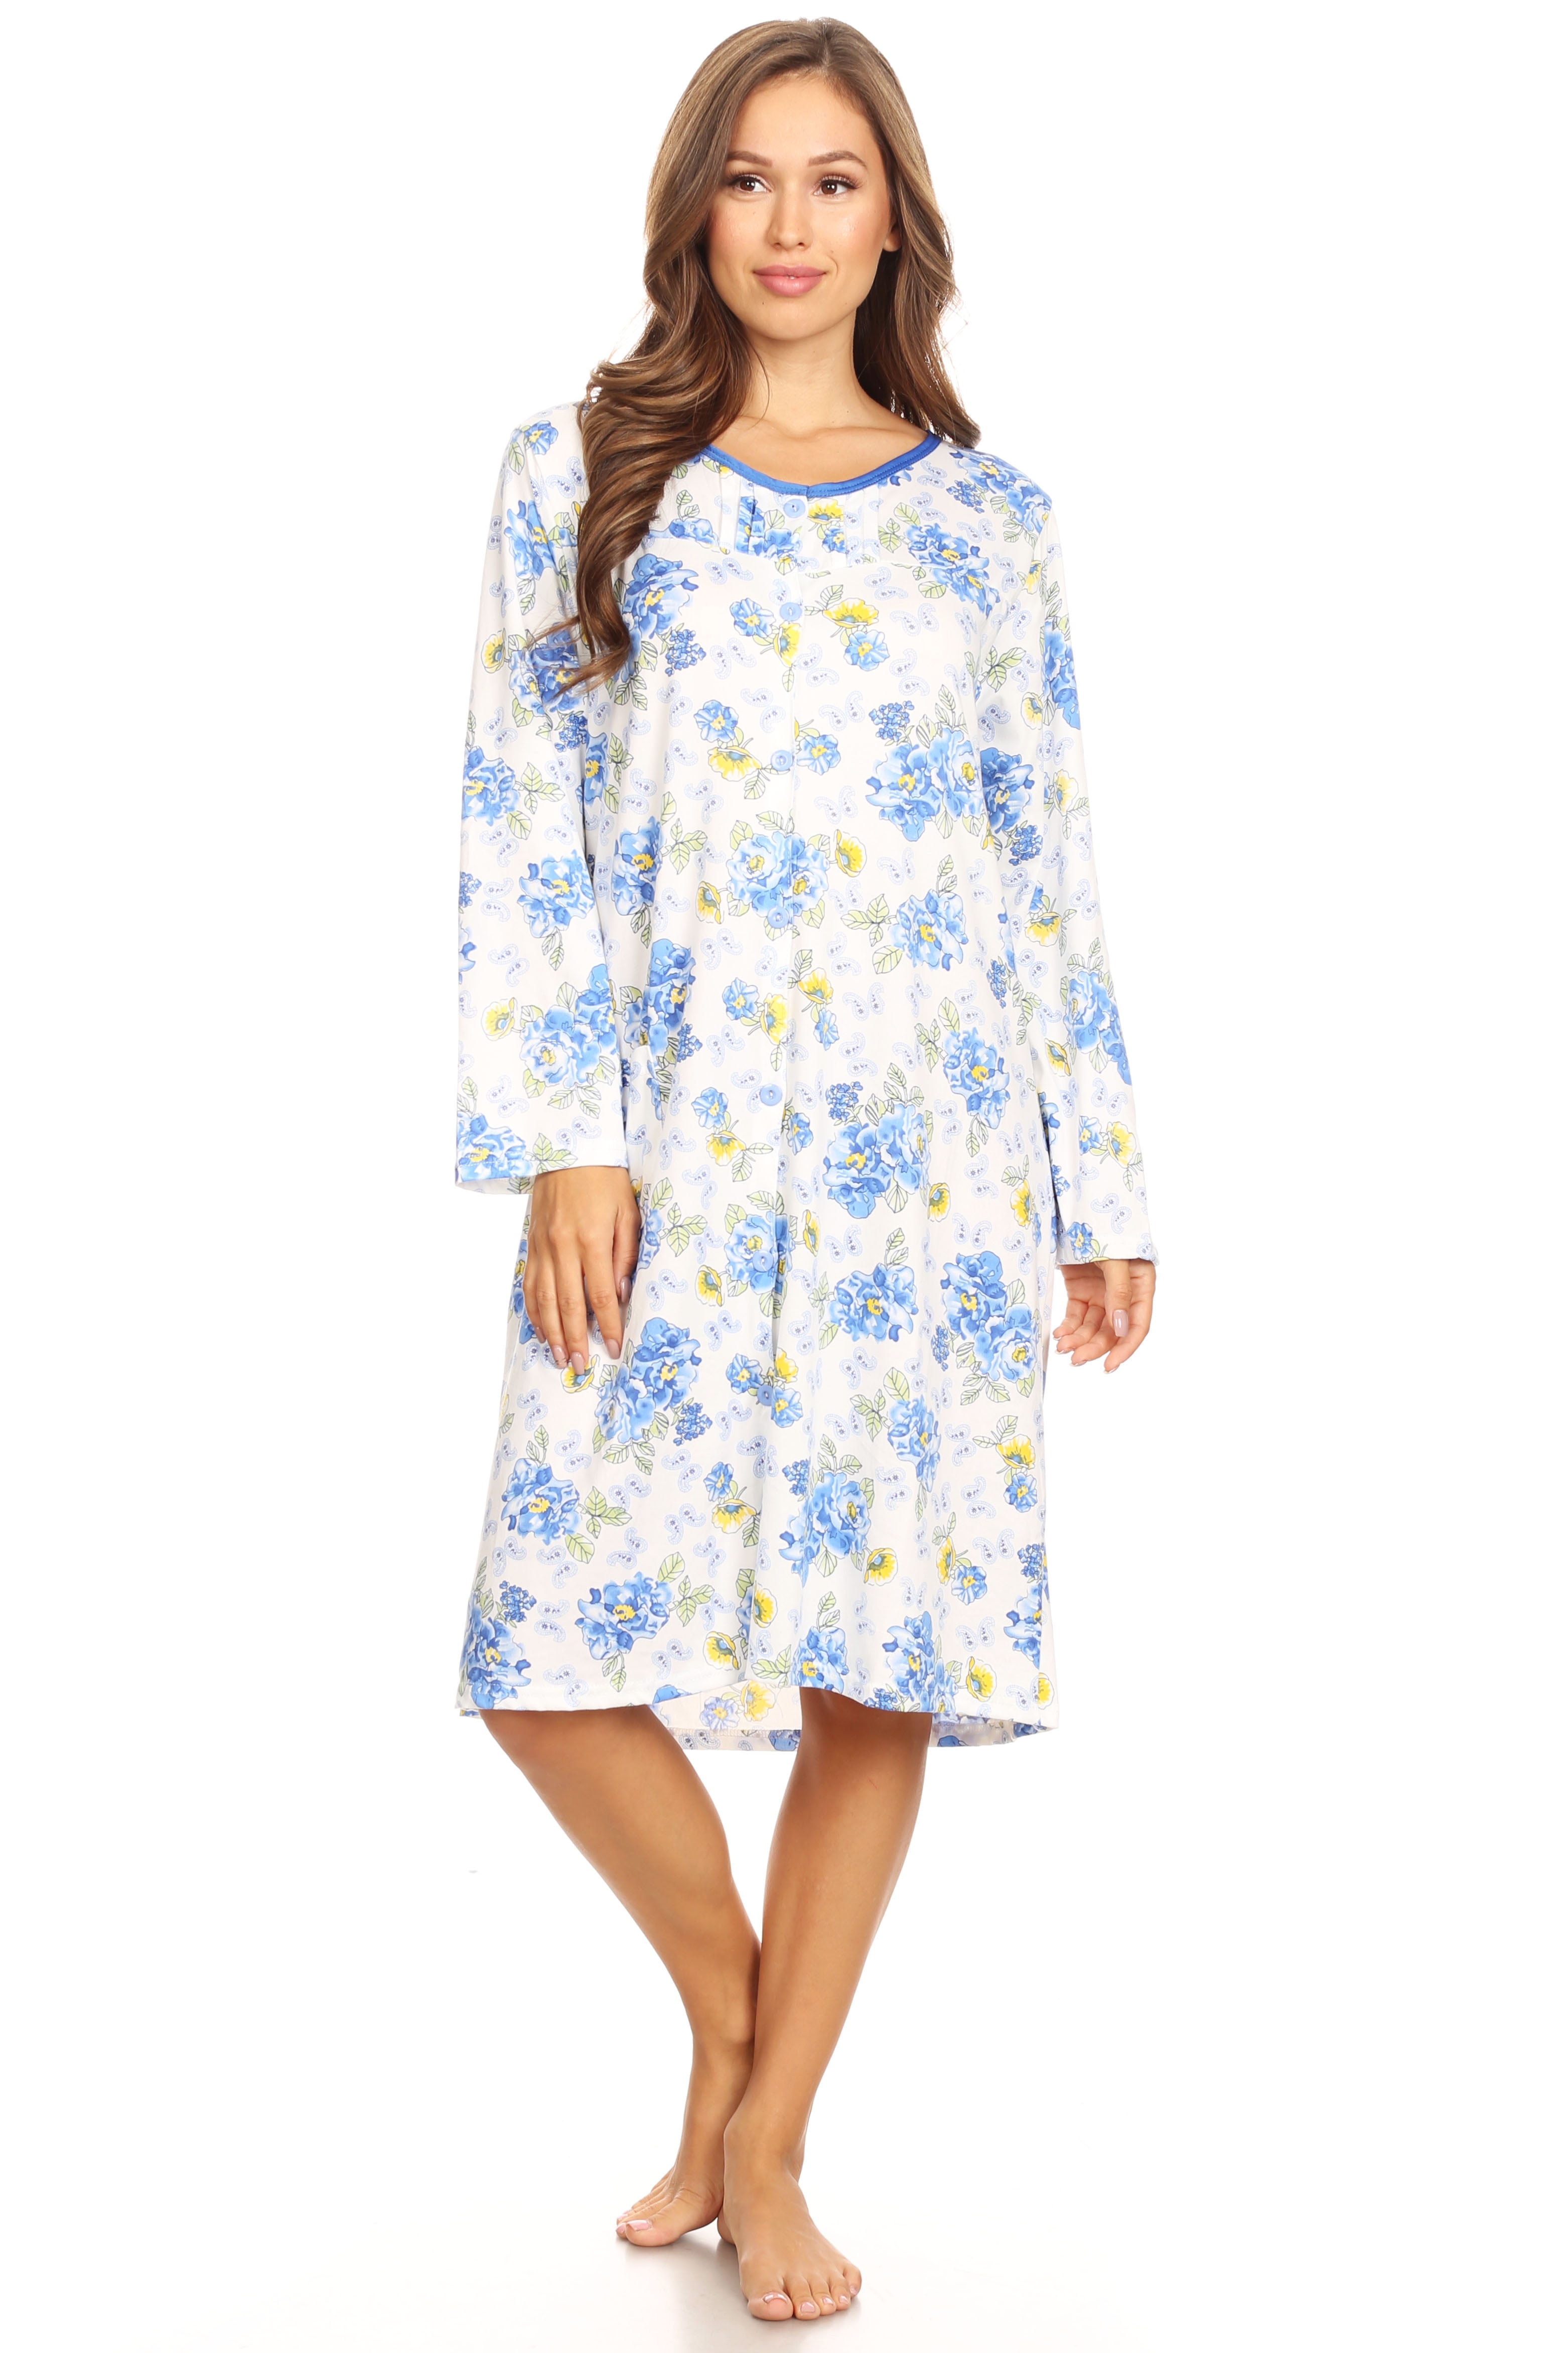 Buy 6007 Womens Nightgown Sleepwear Pajamas Woman Long Sleeve Sleep